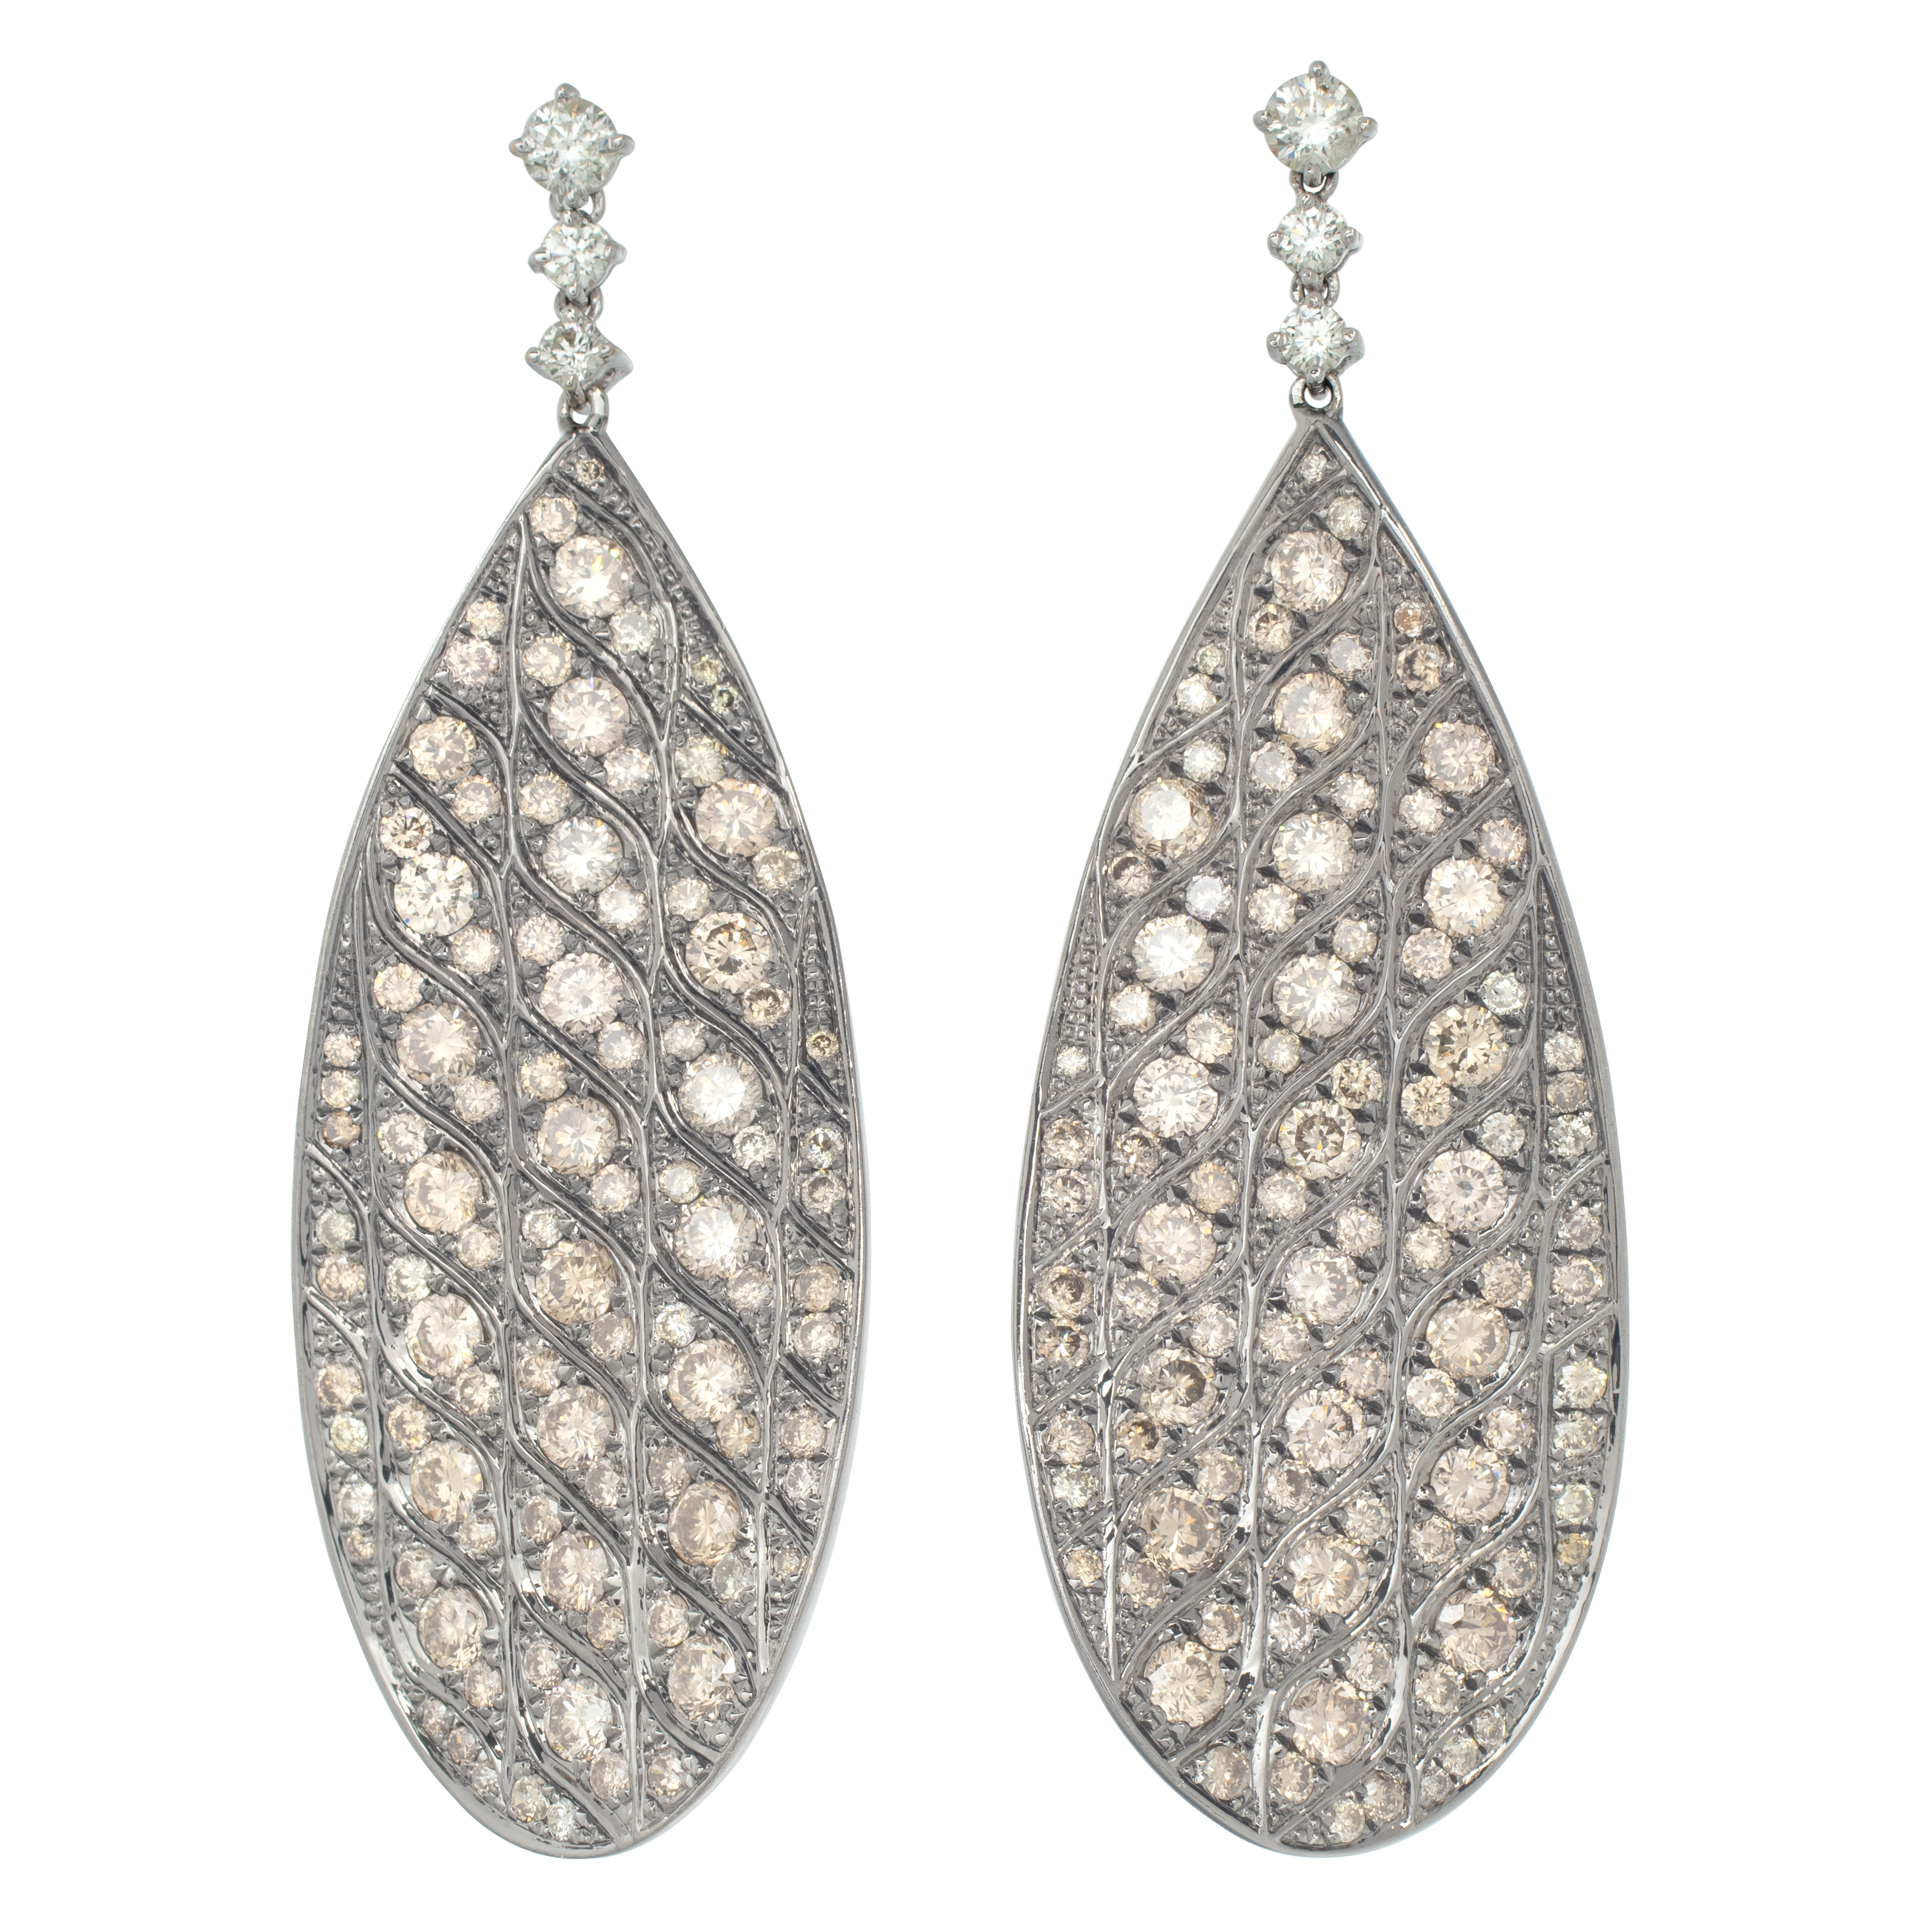 Dangling diamond earrings in 18k white gold